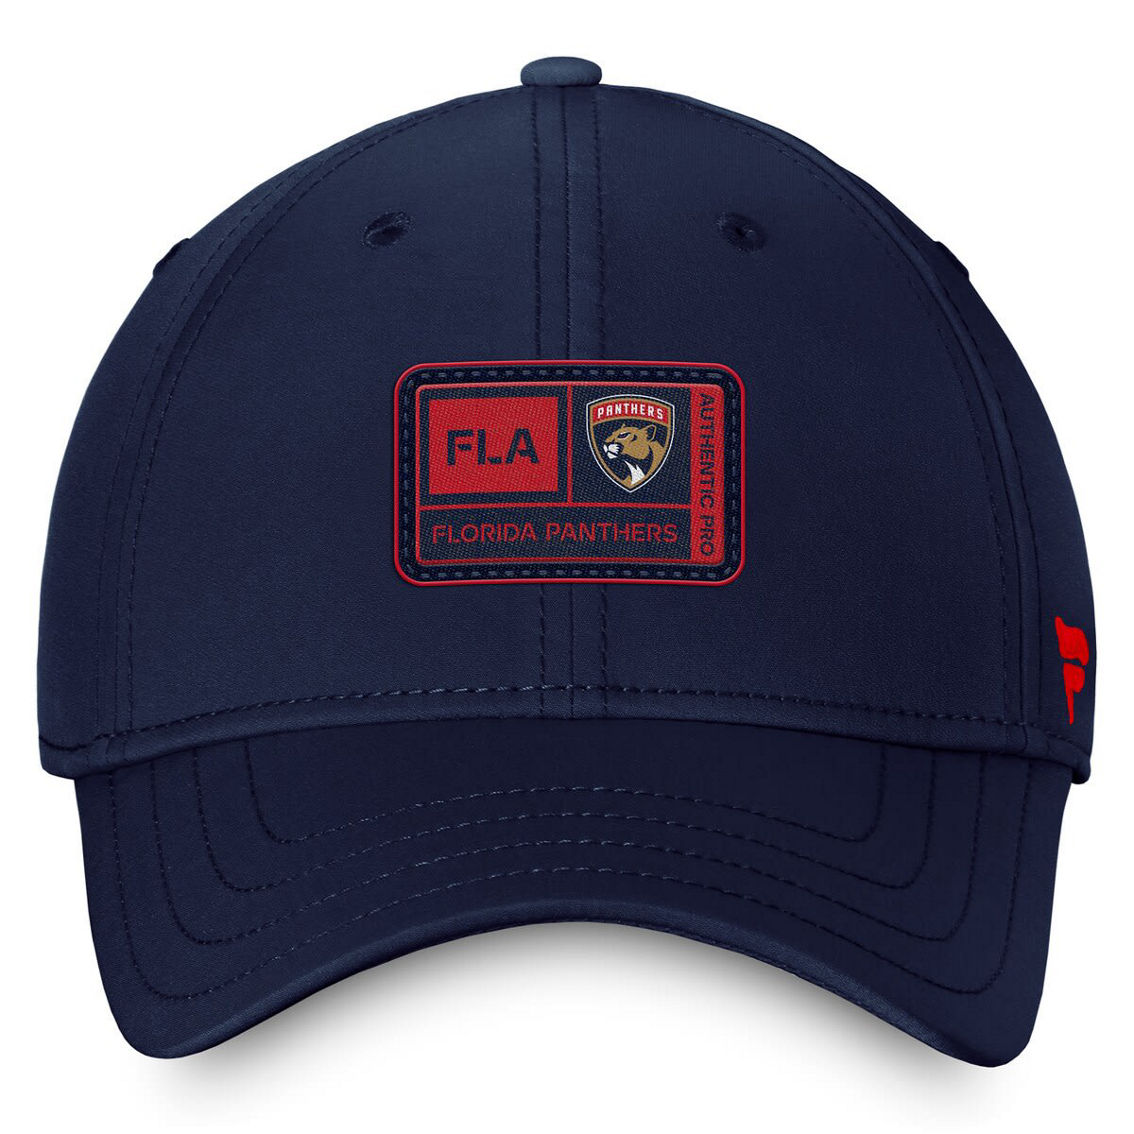 Fanatics Branded Men's Navy Florida Panthers Authentic Pro Training Camp Flex Hat - Image 3 of 4